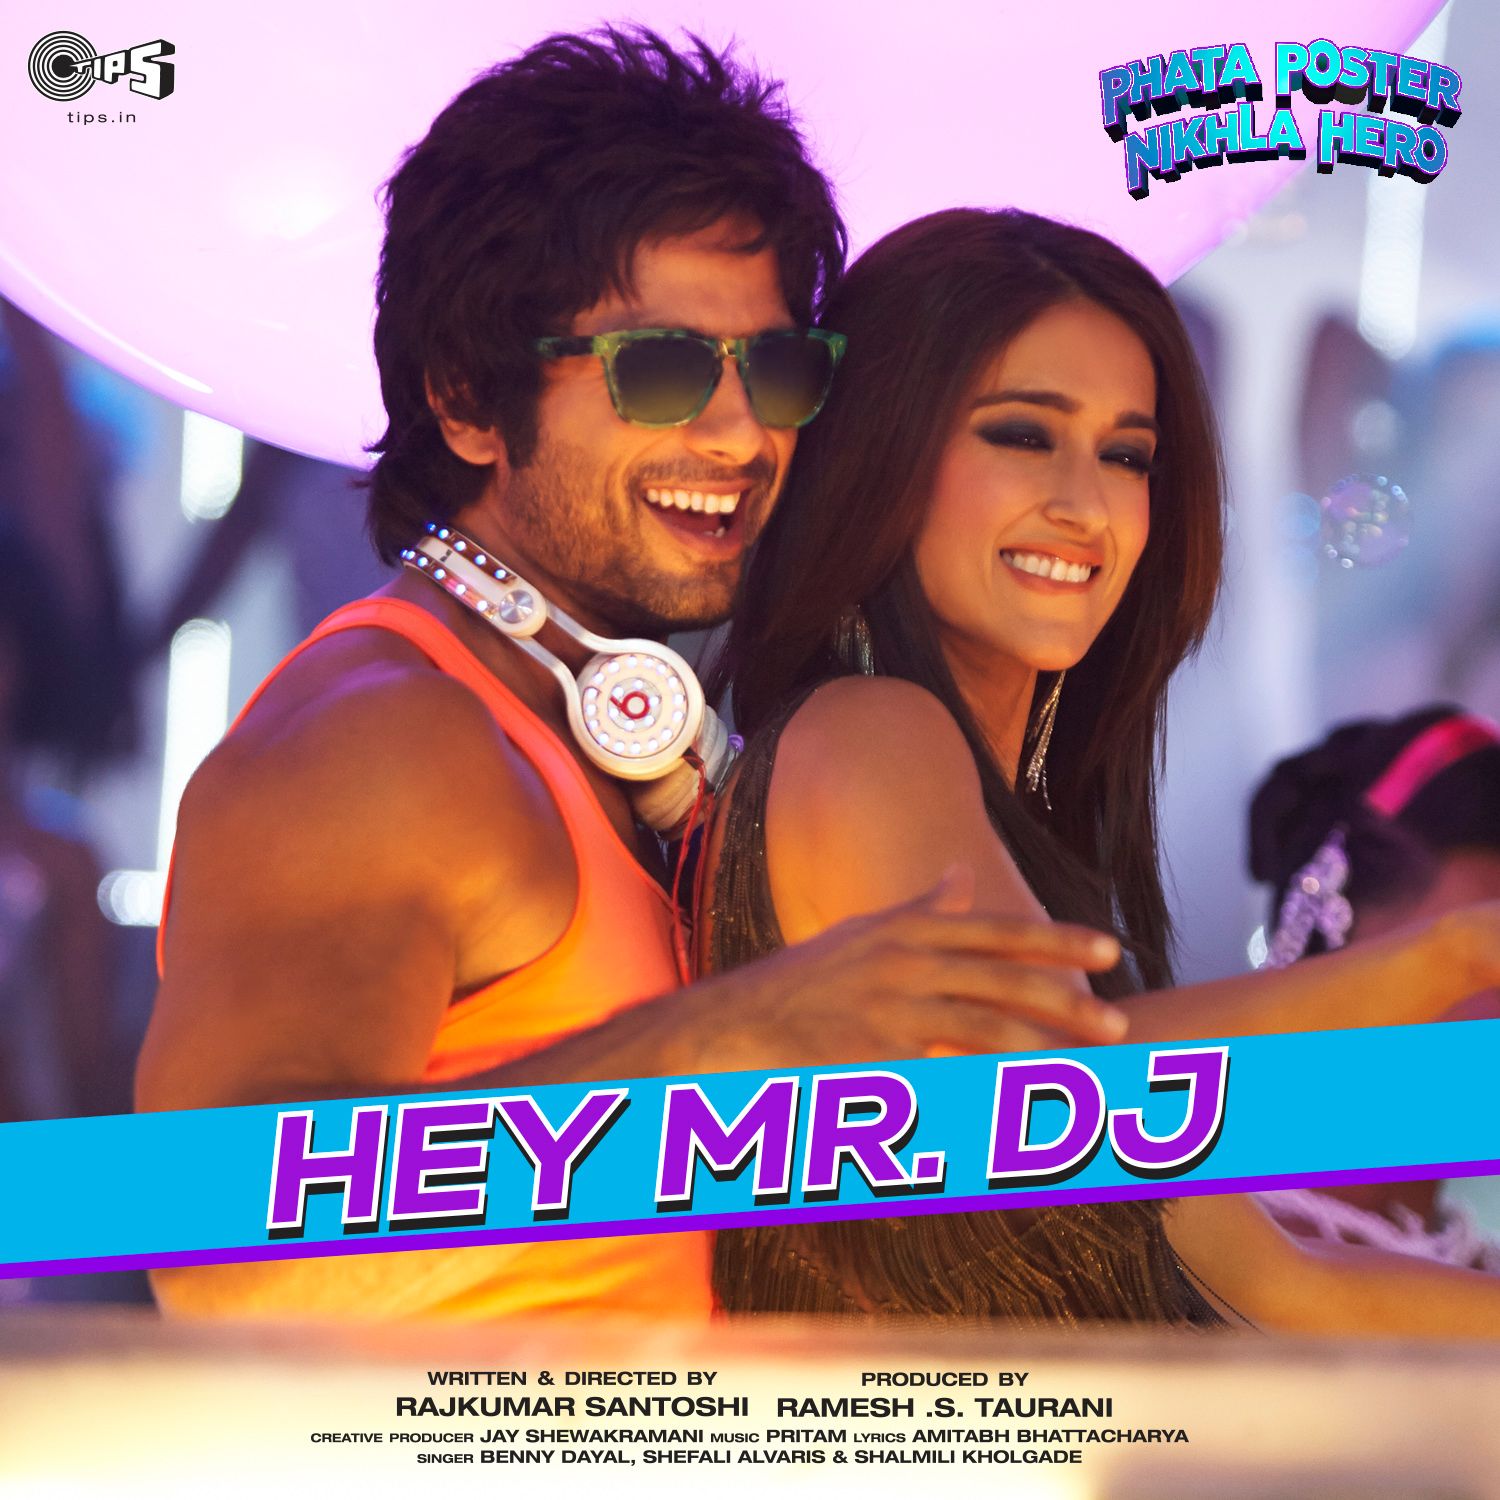 Hey Mr. DJ - Phata Poster Nikhla Hero